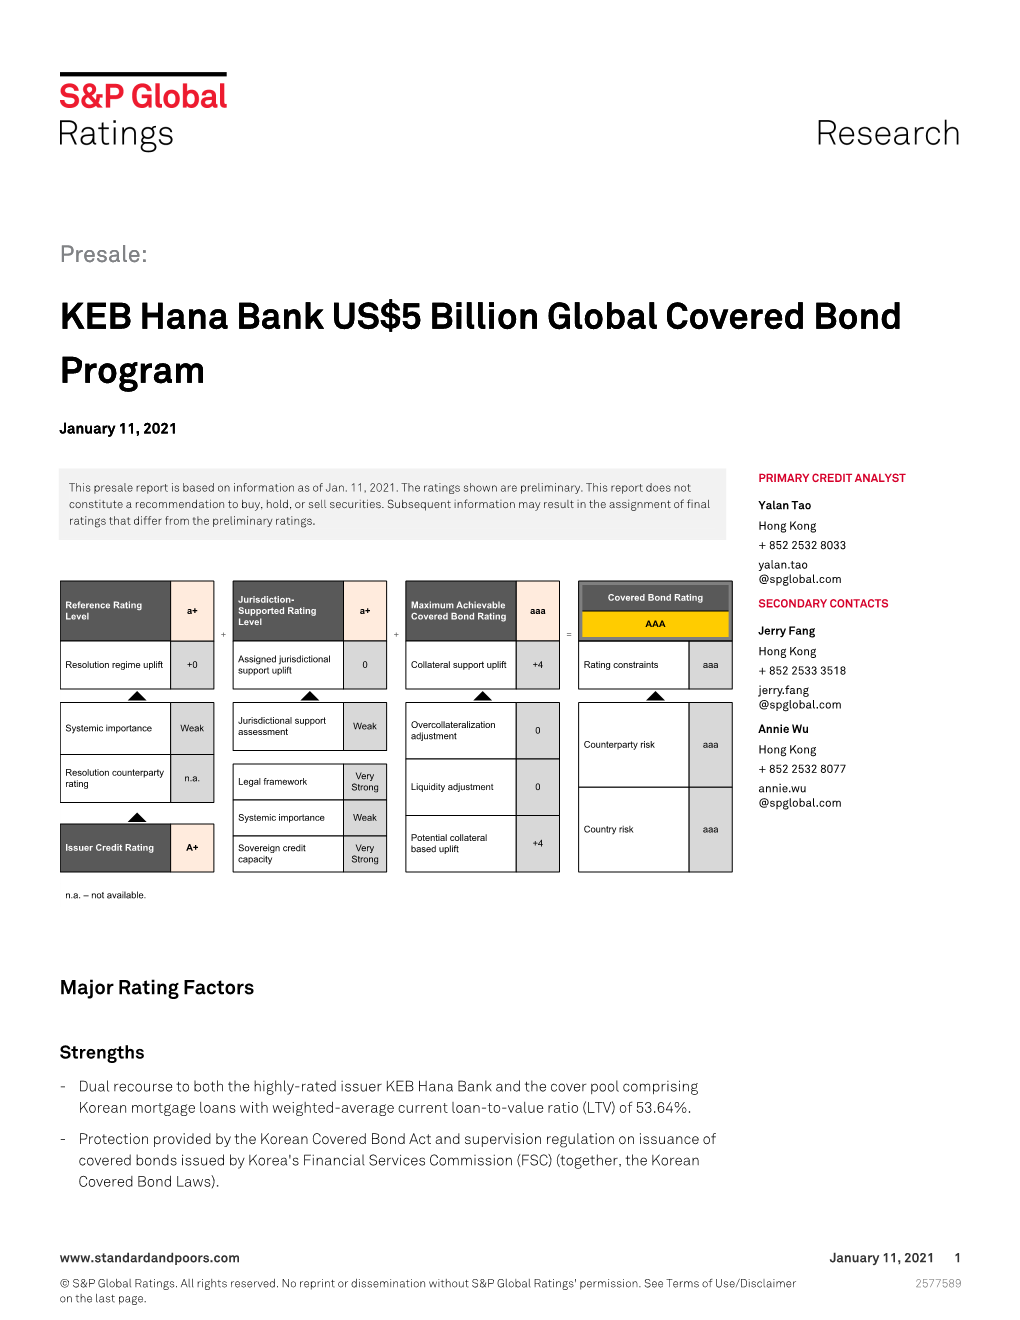 KEB Hana Bank US$5 Billion Global Covered Bond Program